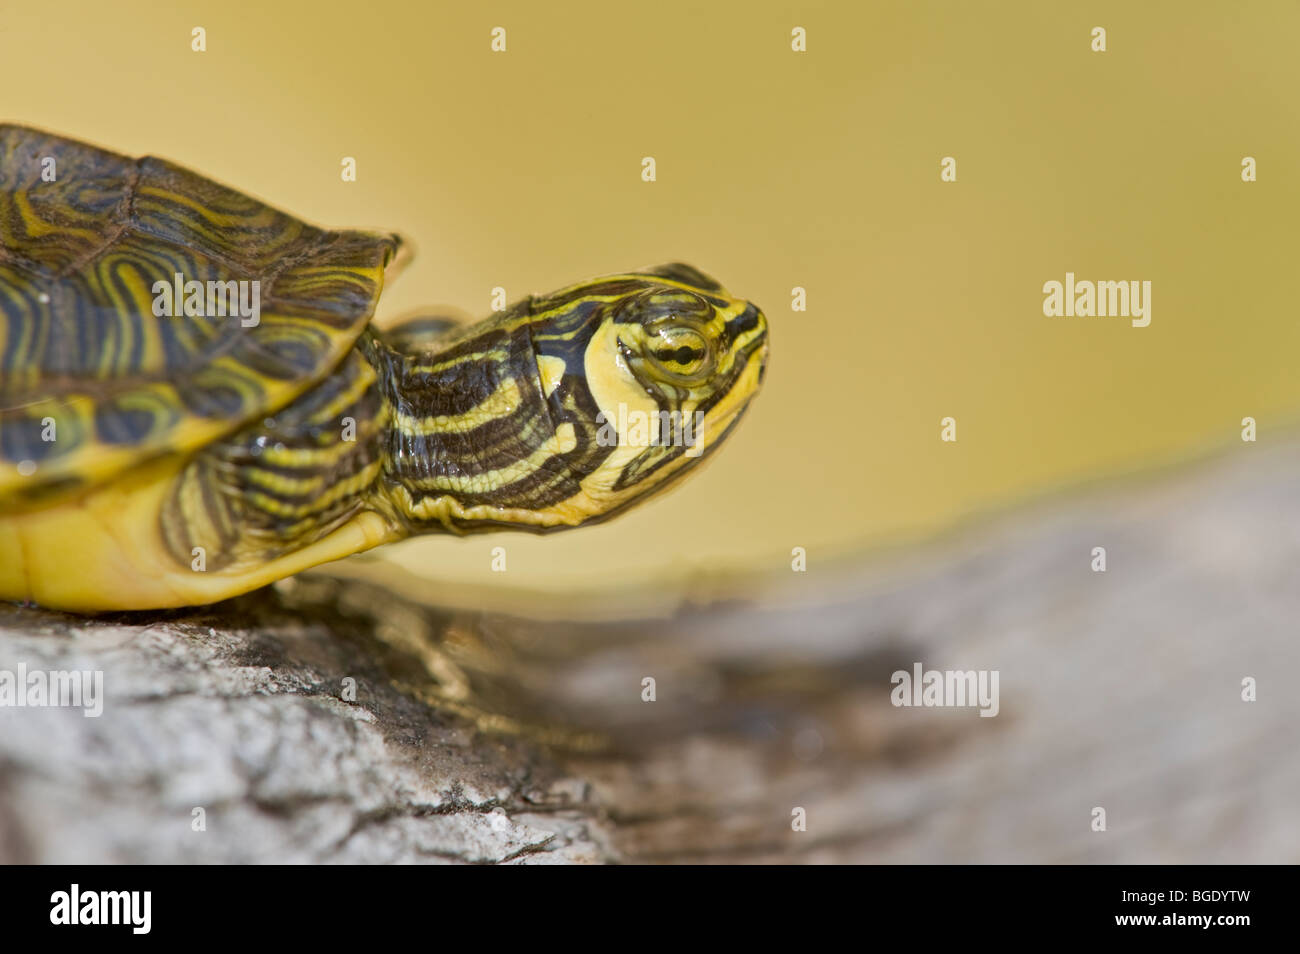 Closeup of a turtle Stock Photo